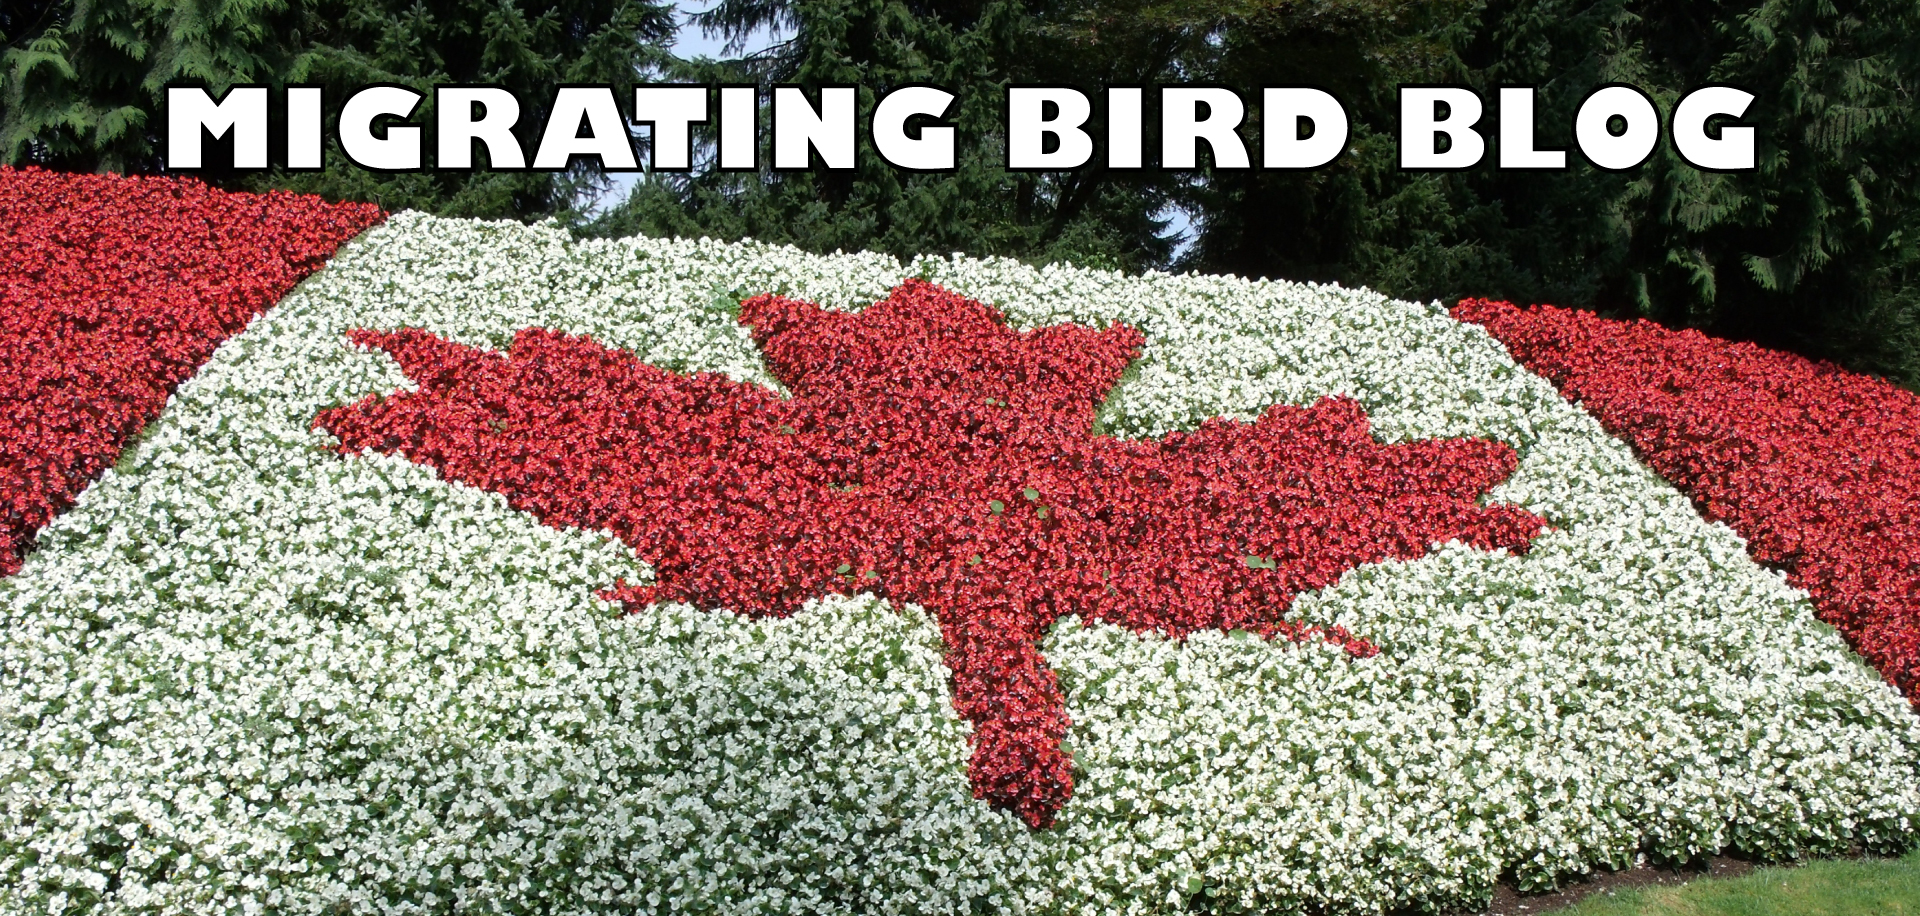 Migrating Bird Immigration Services Blog